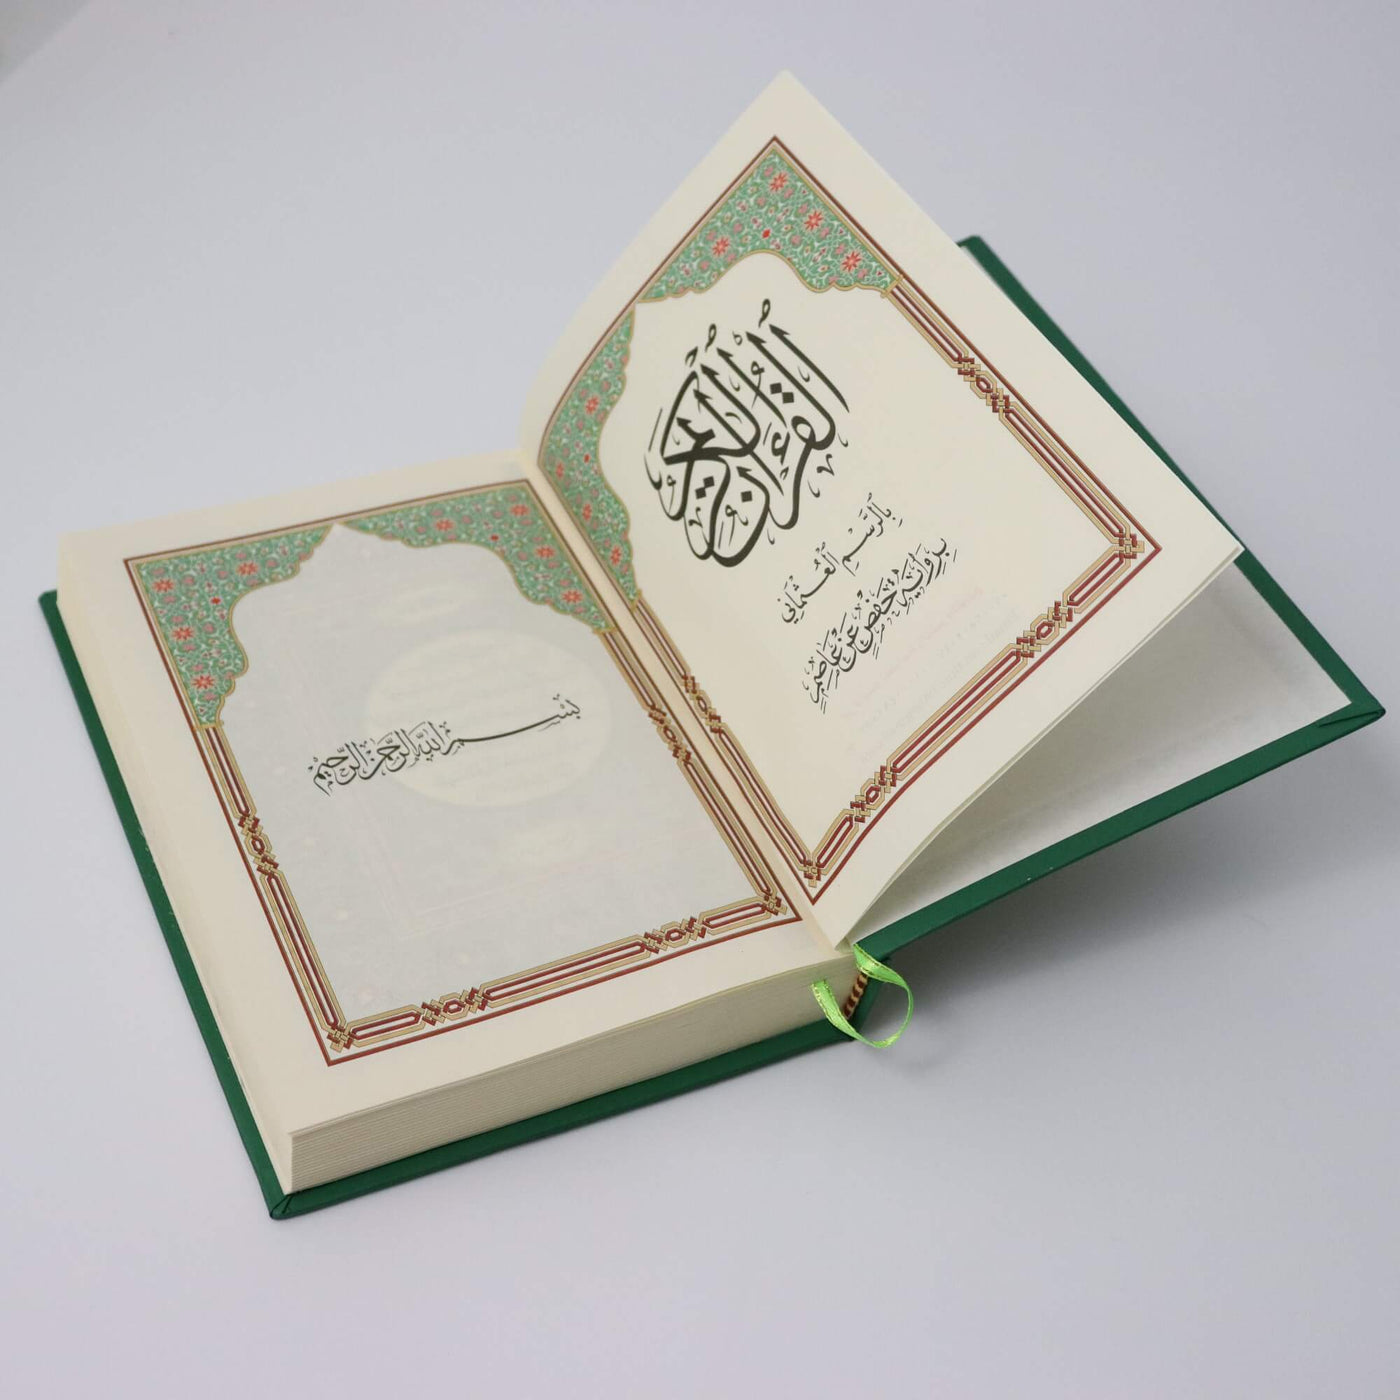 Al Quran Al Kareem Uthmani Script